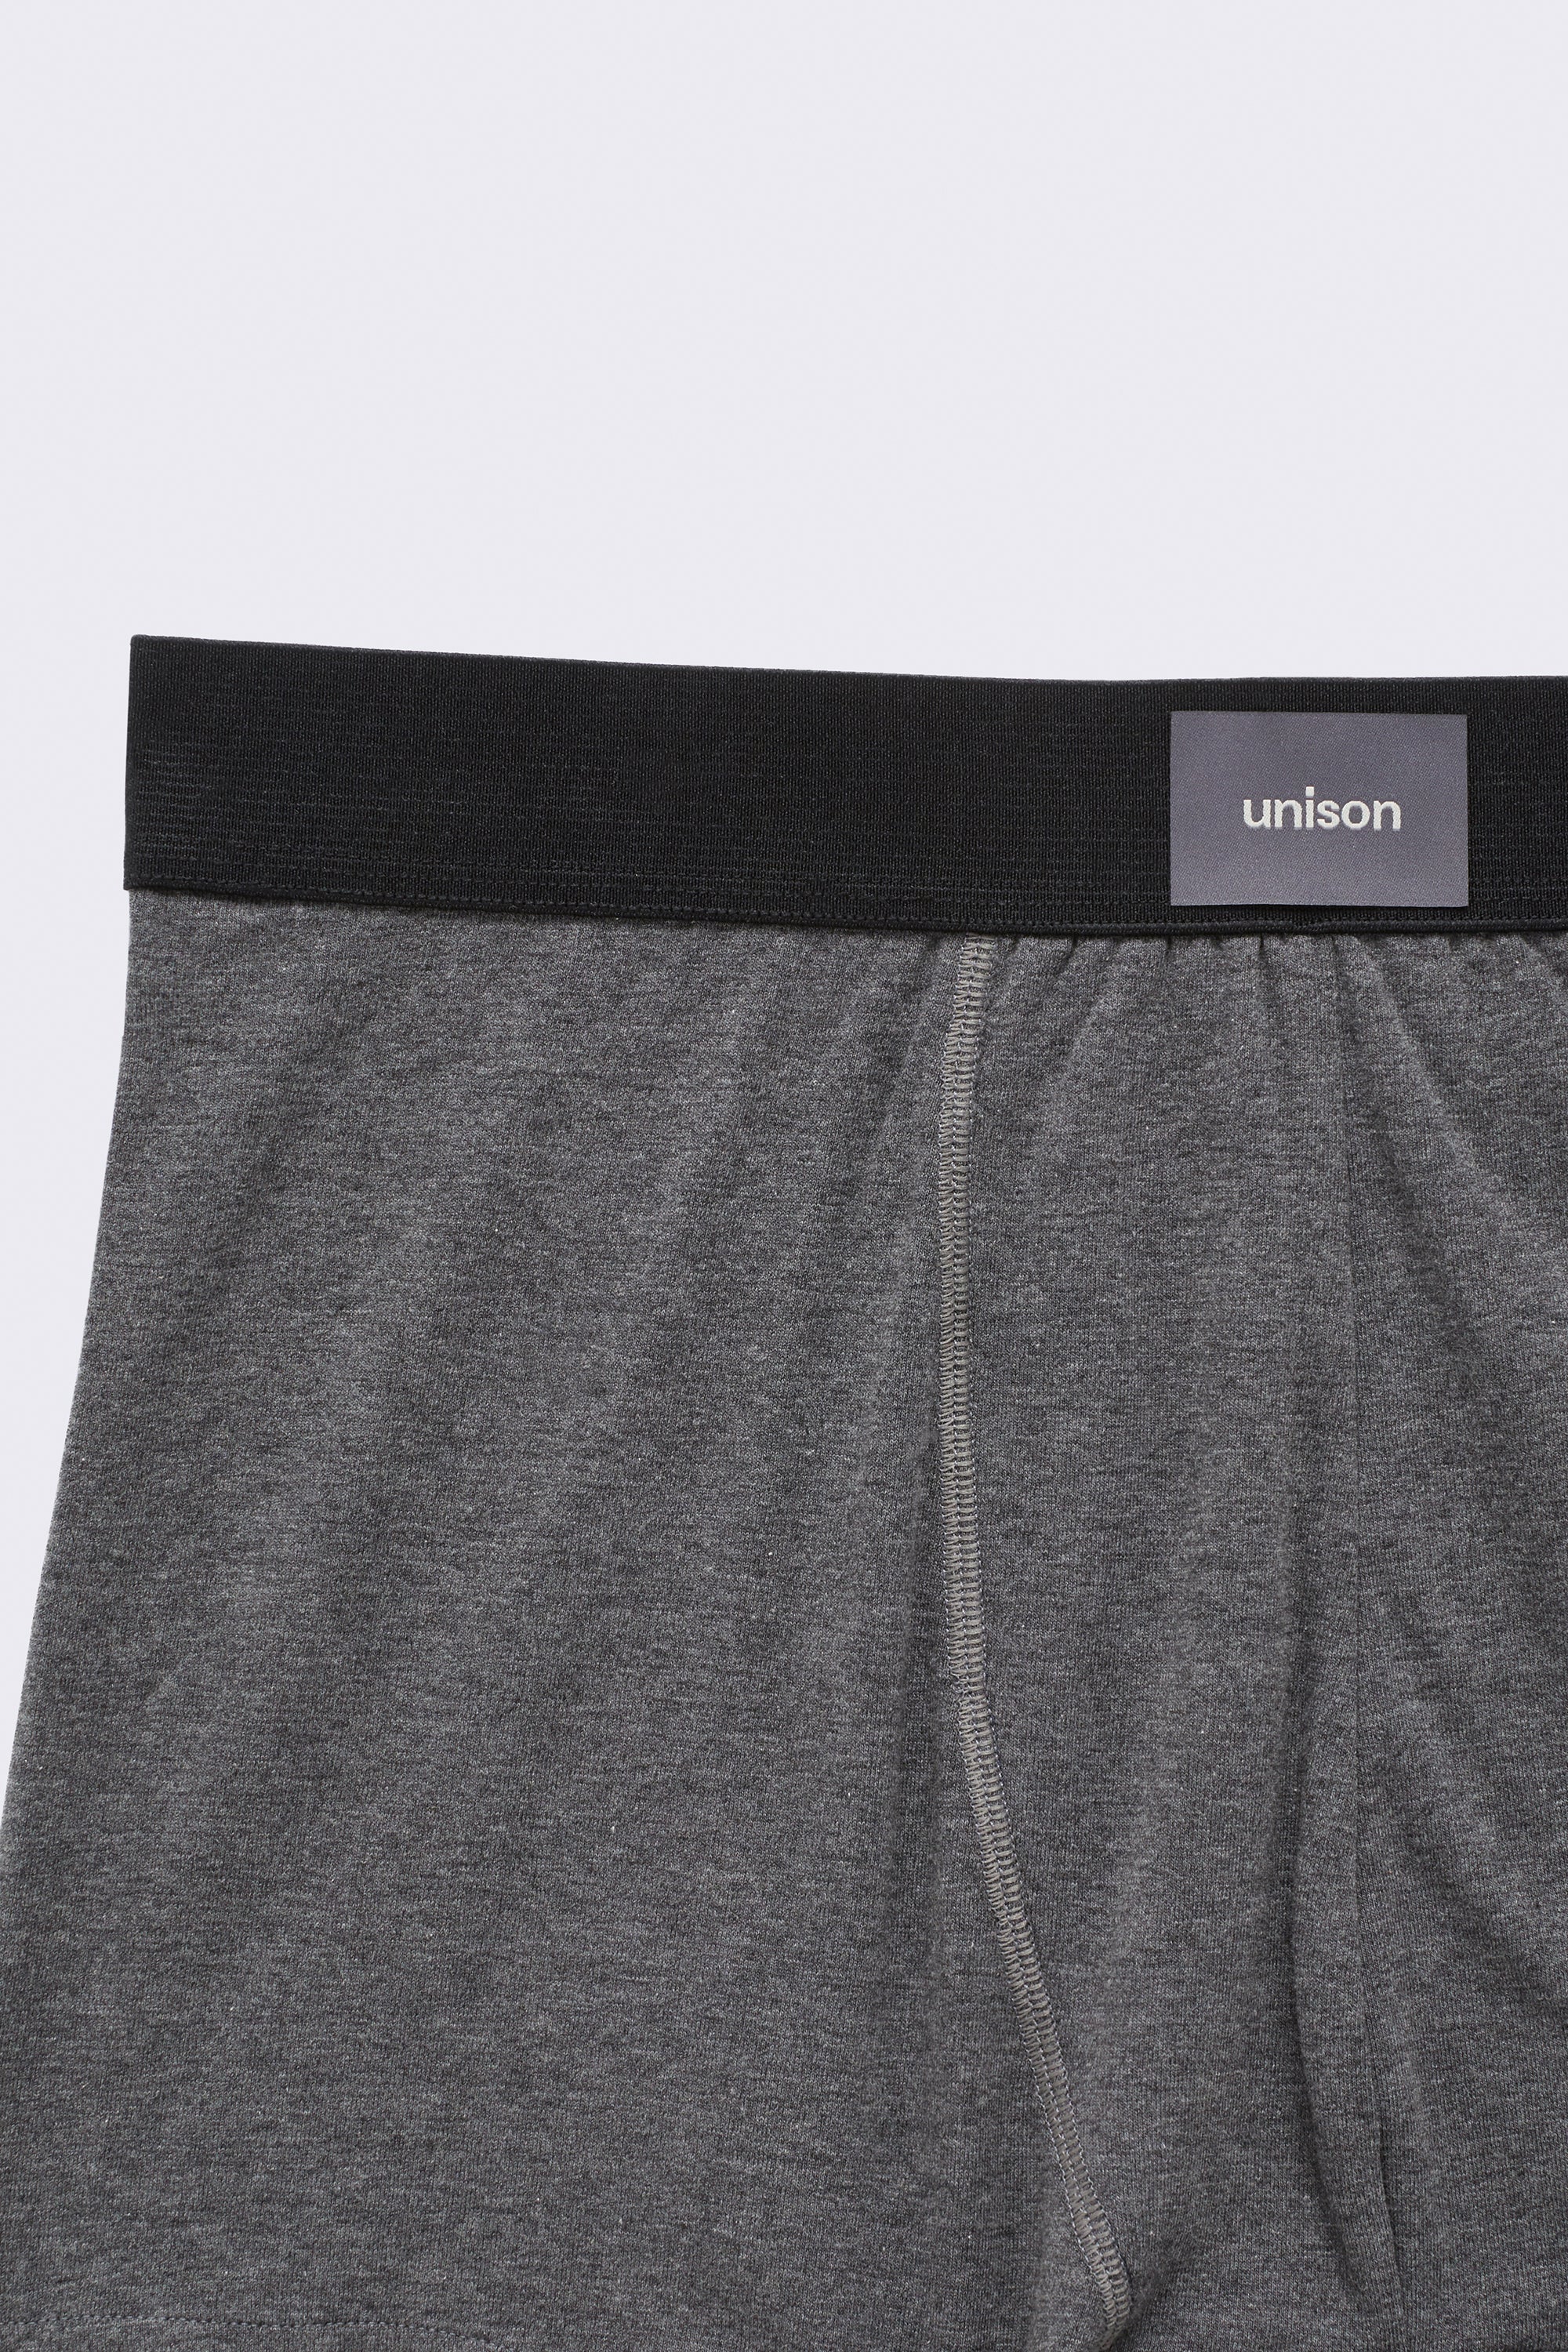 Underpants from MeUndies for Women in Gray